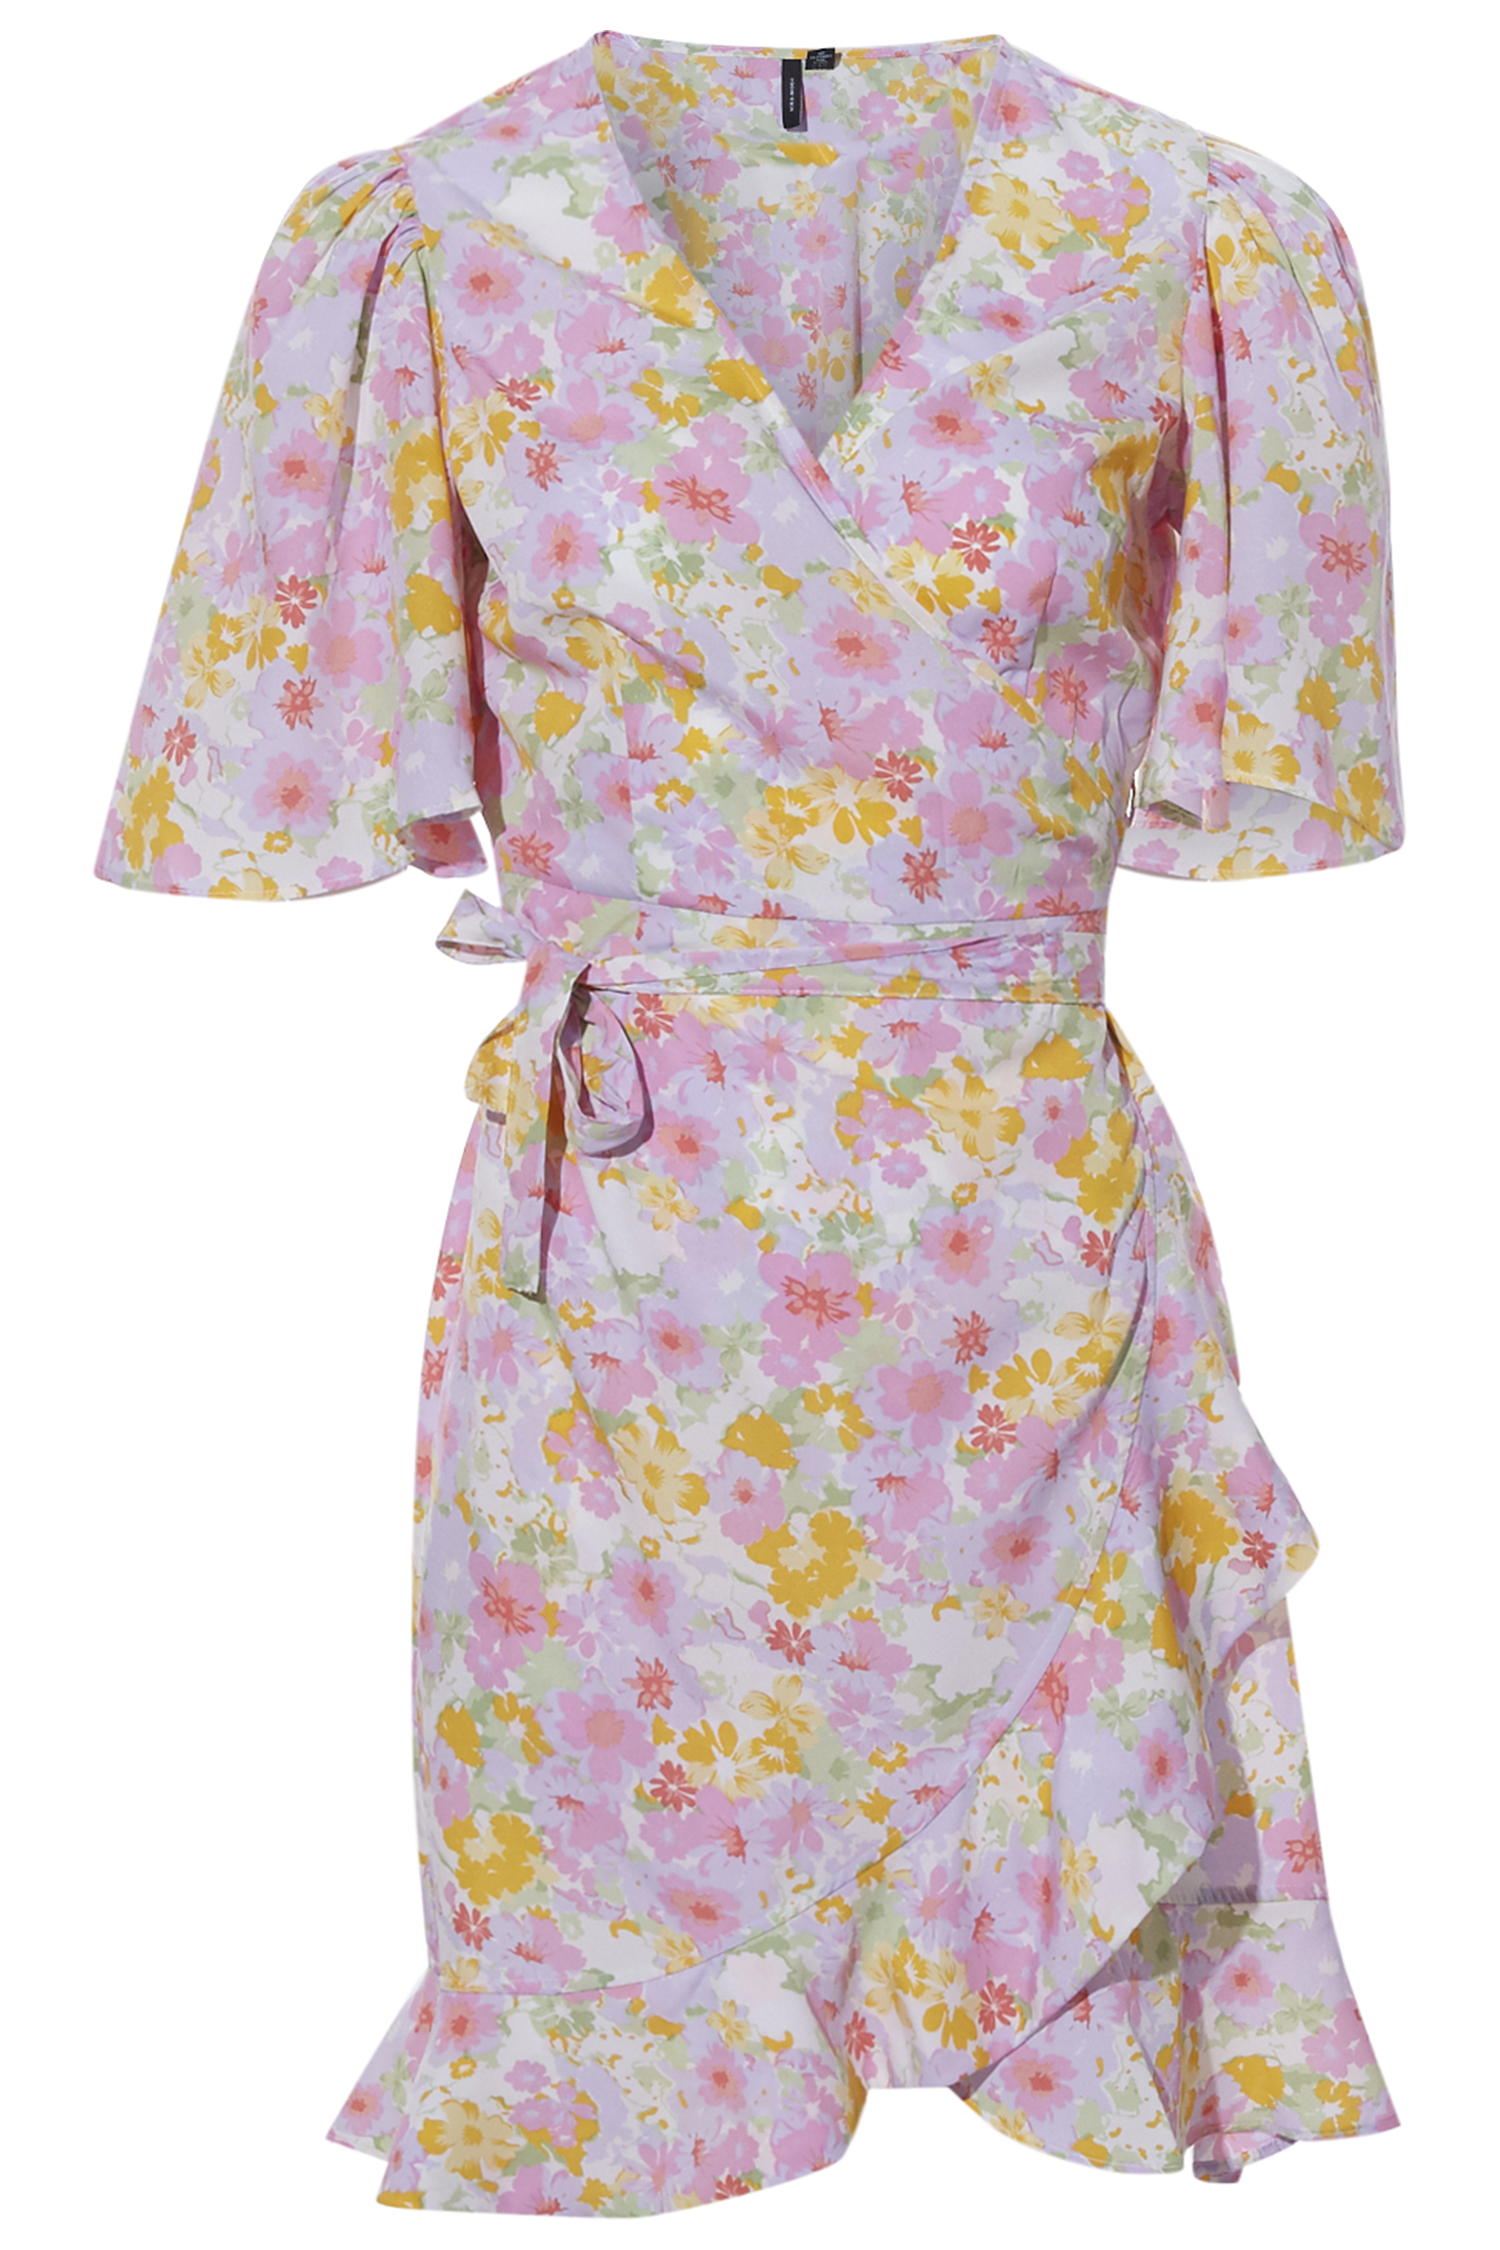 Vero Moda Floral Wrap Dress in Pink Multi XS - S | DAILYLOOK